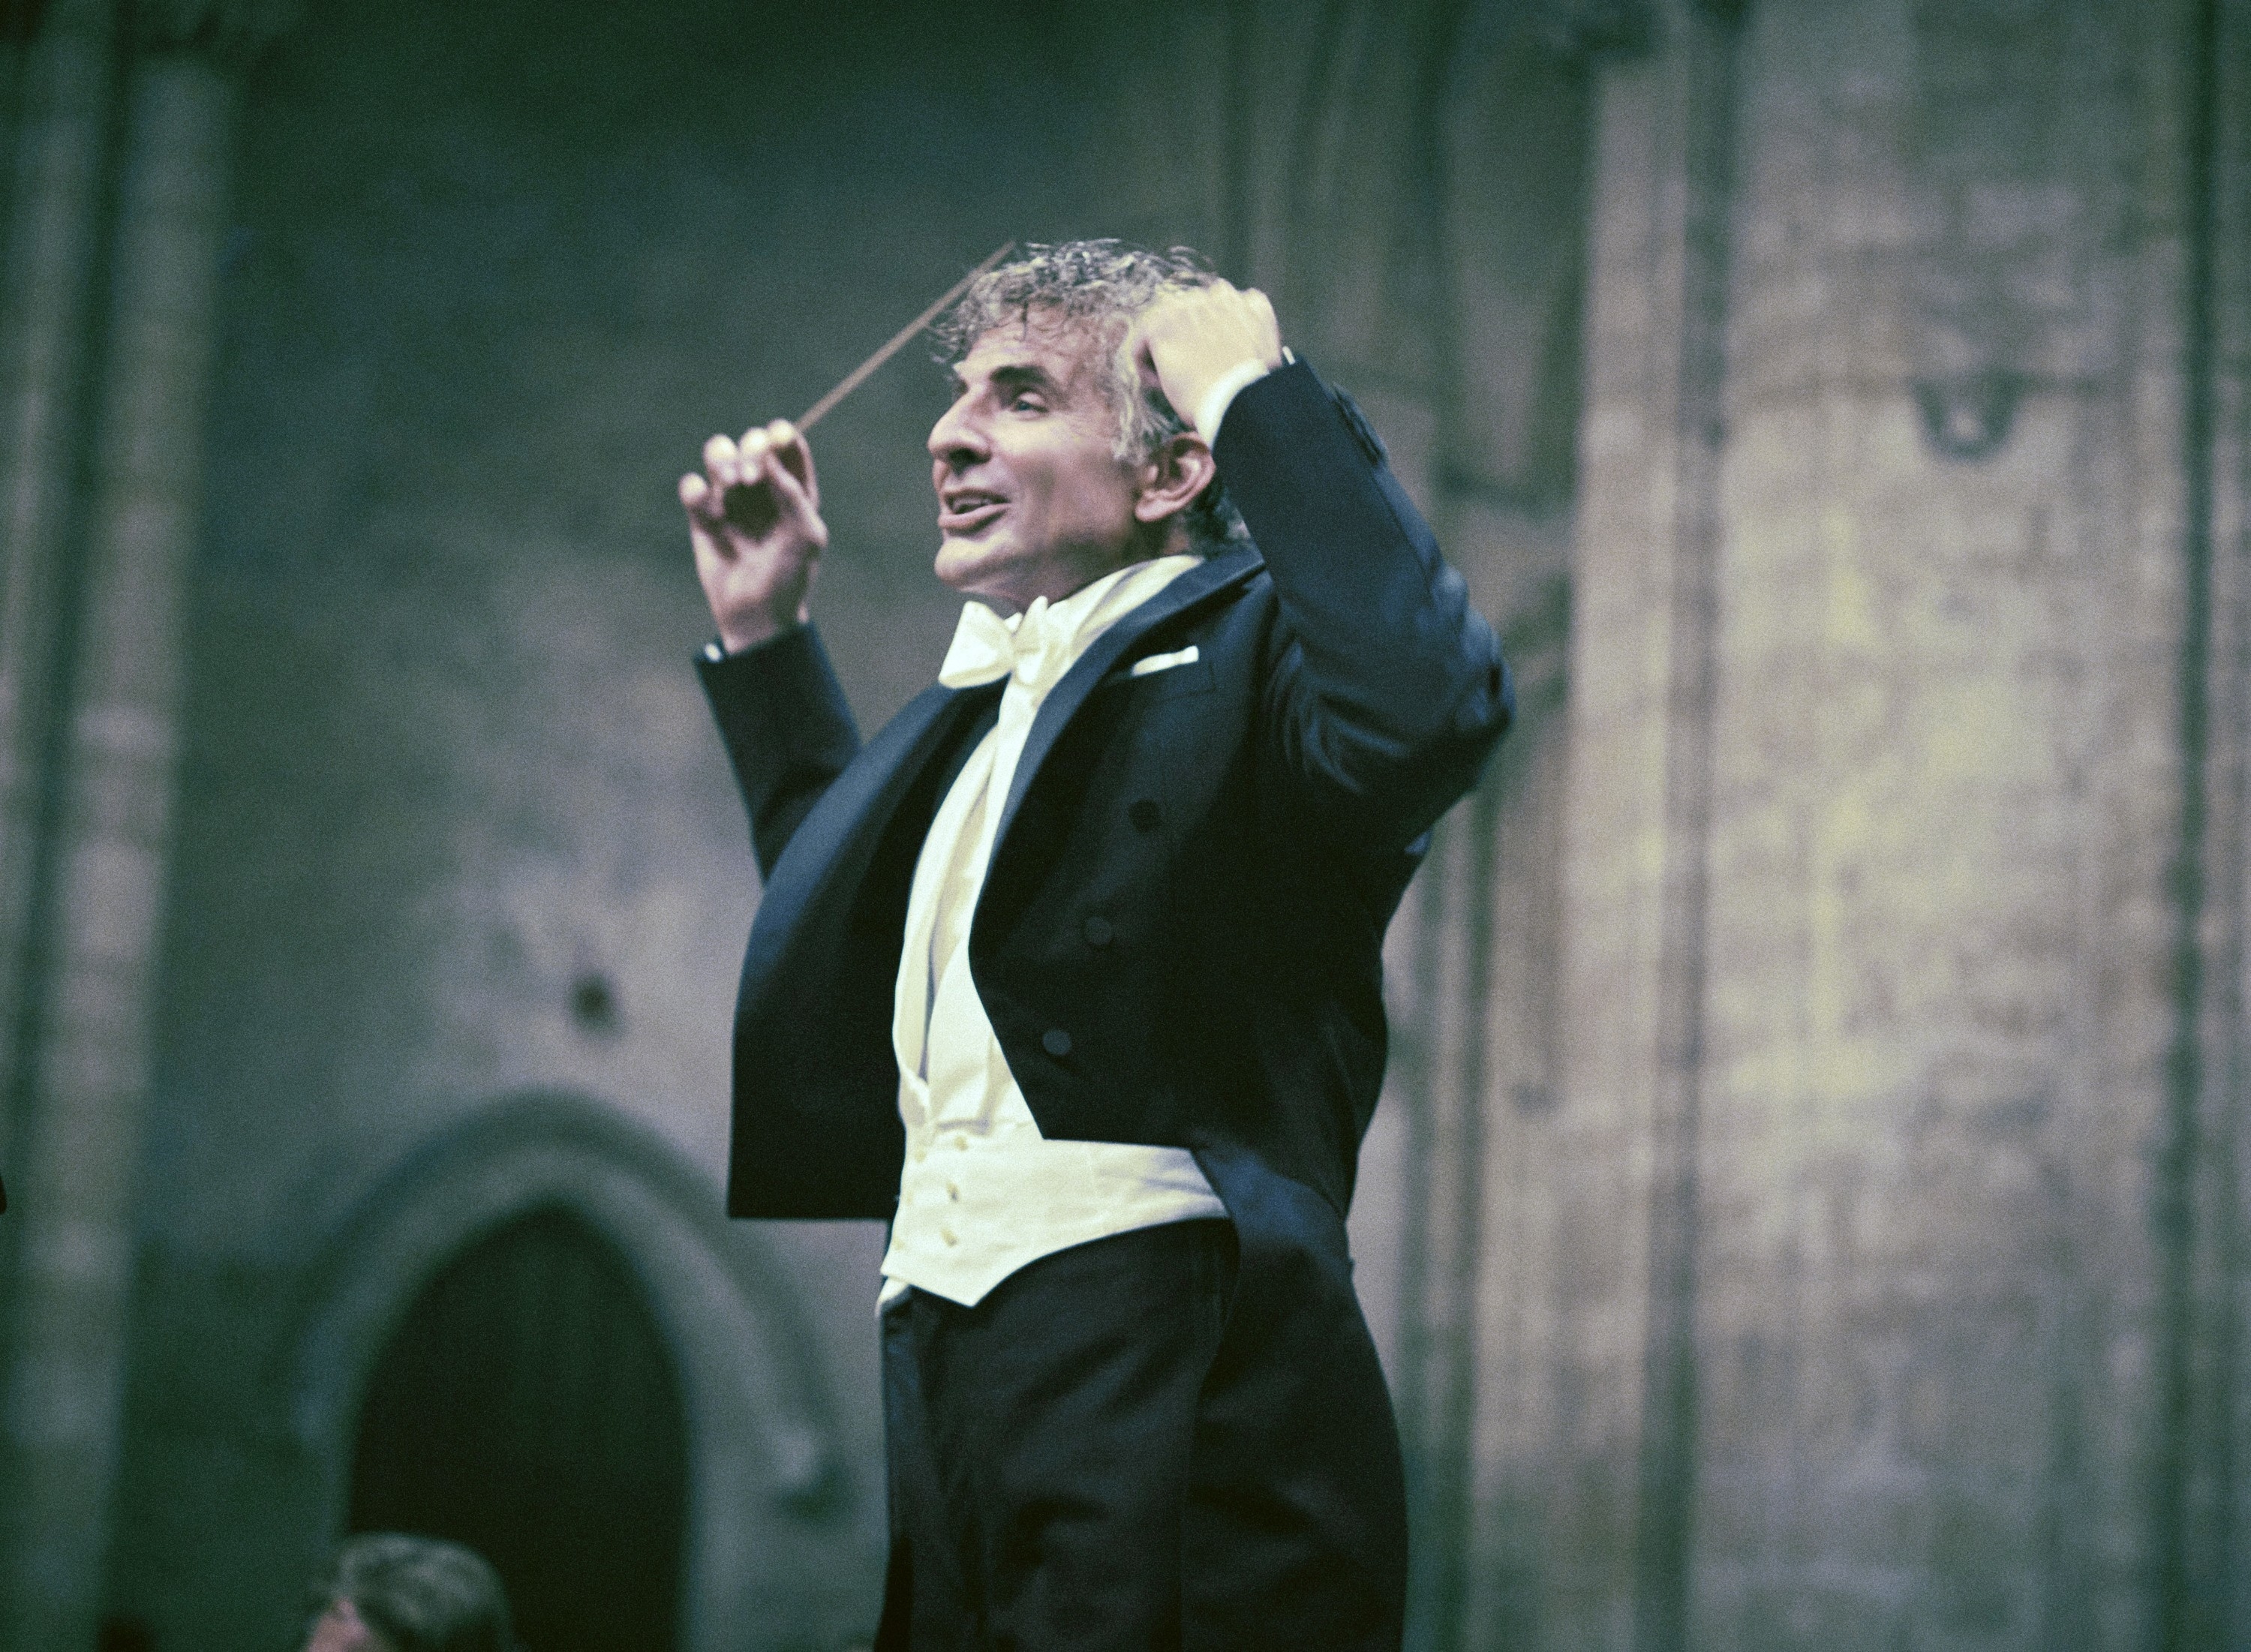 Bradley as Bernstein conducting an orchestra